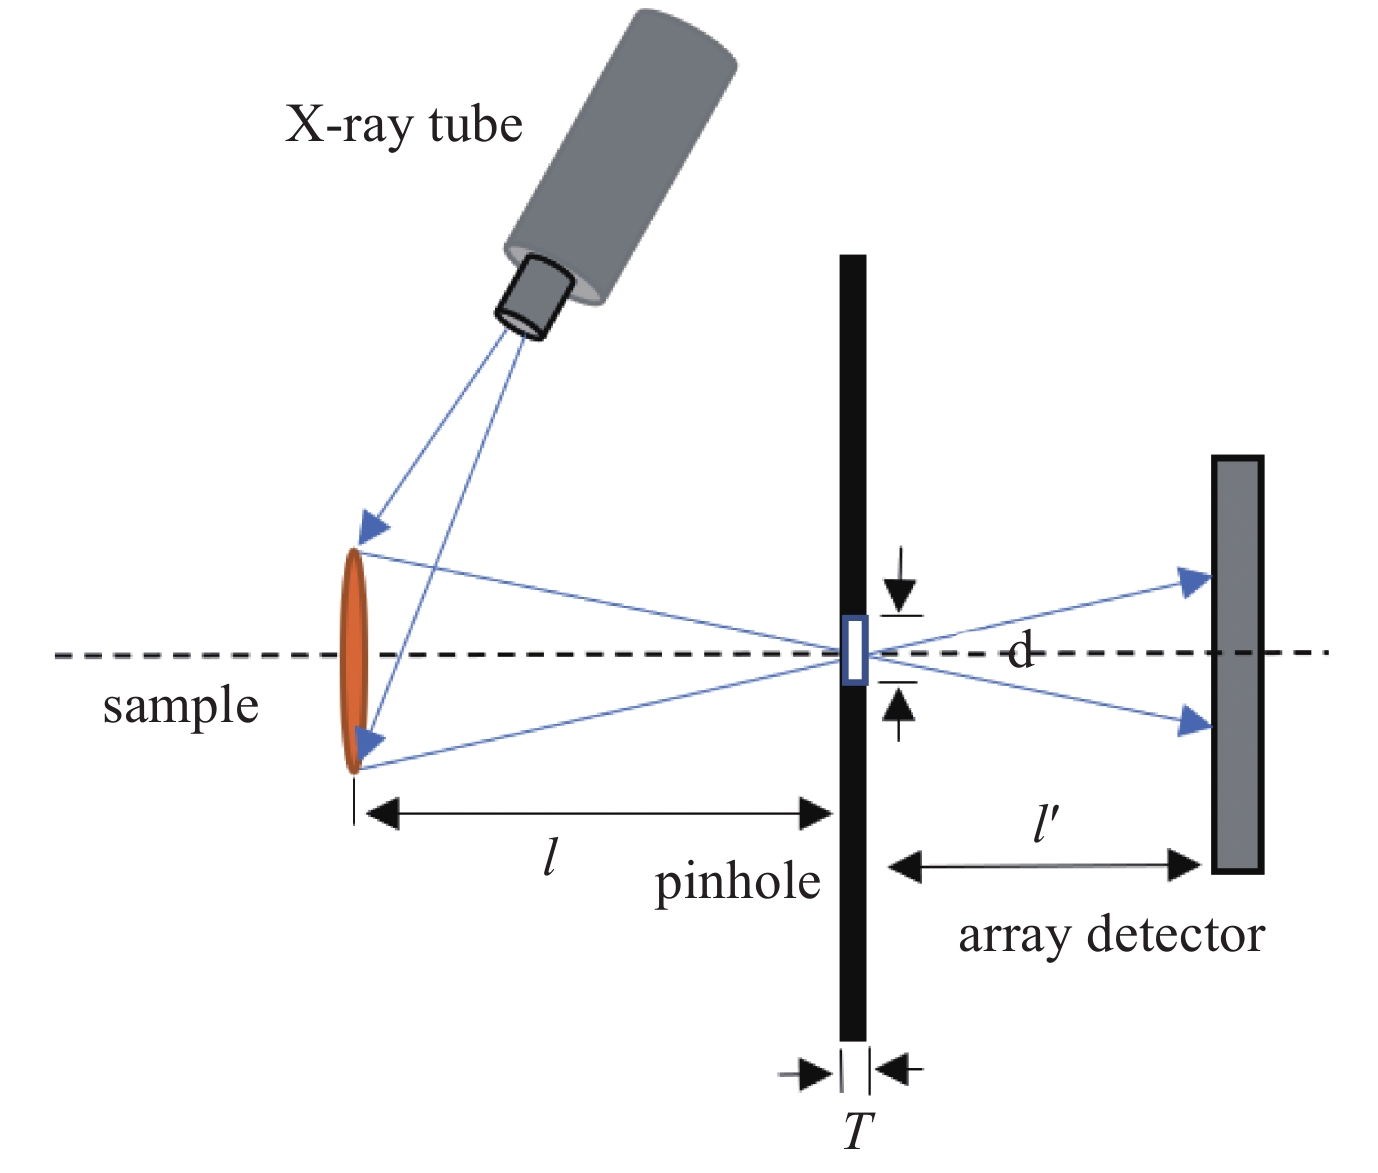 The principle of FF-XRF imaging based on pinhole